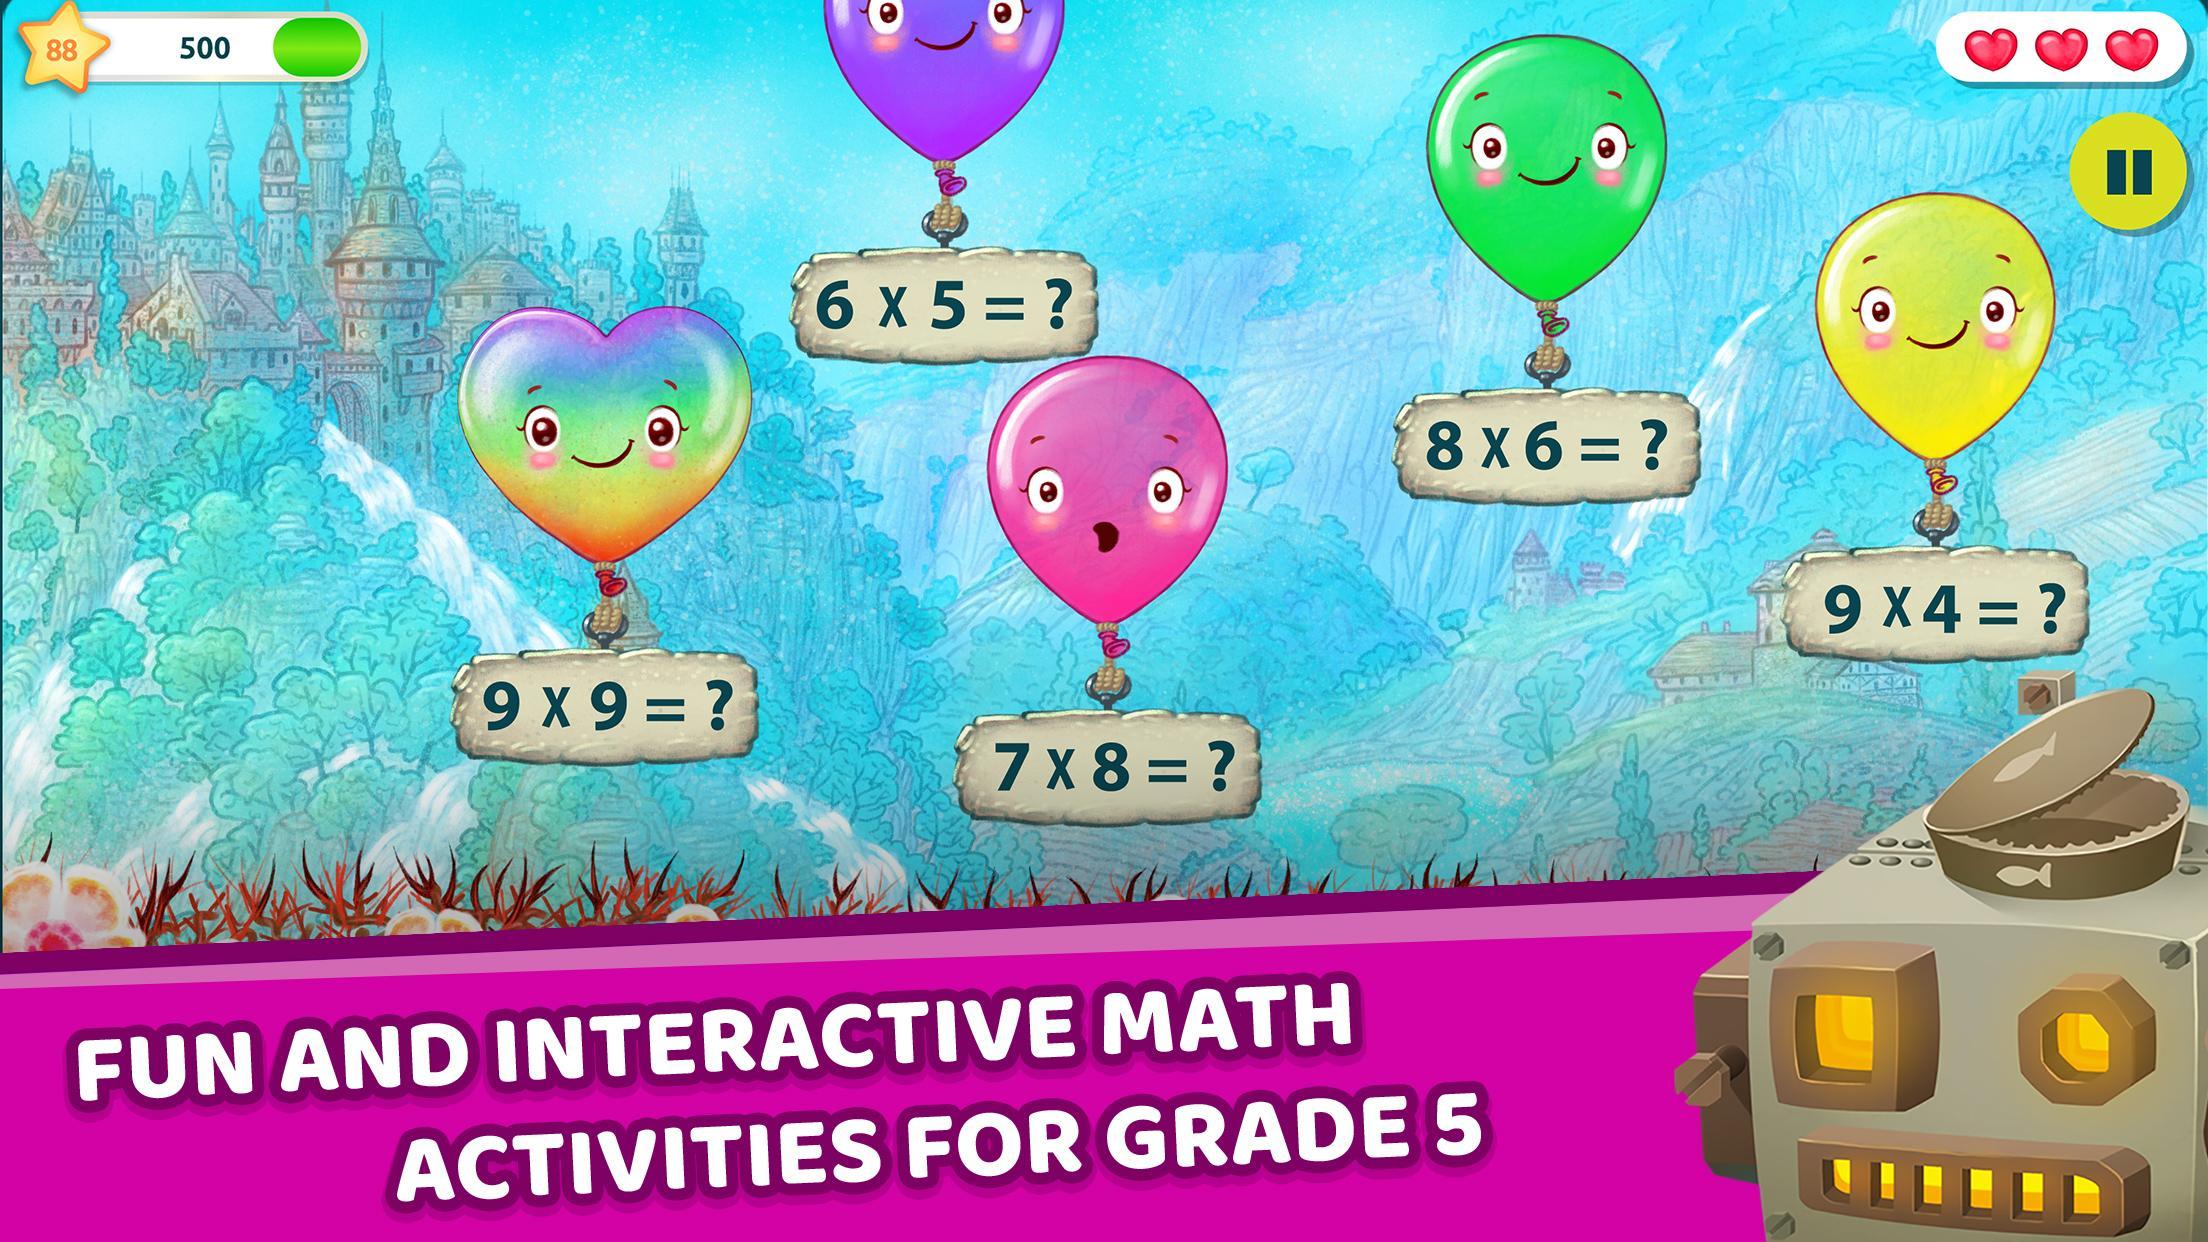 Matific Galaxy - Maths Games for 5th Graders 2.2.2 Screenshot 15